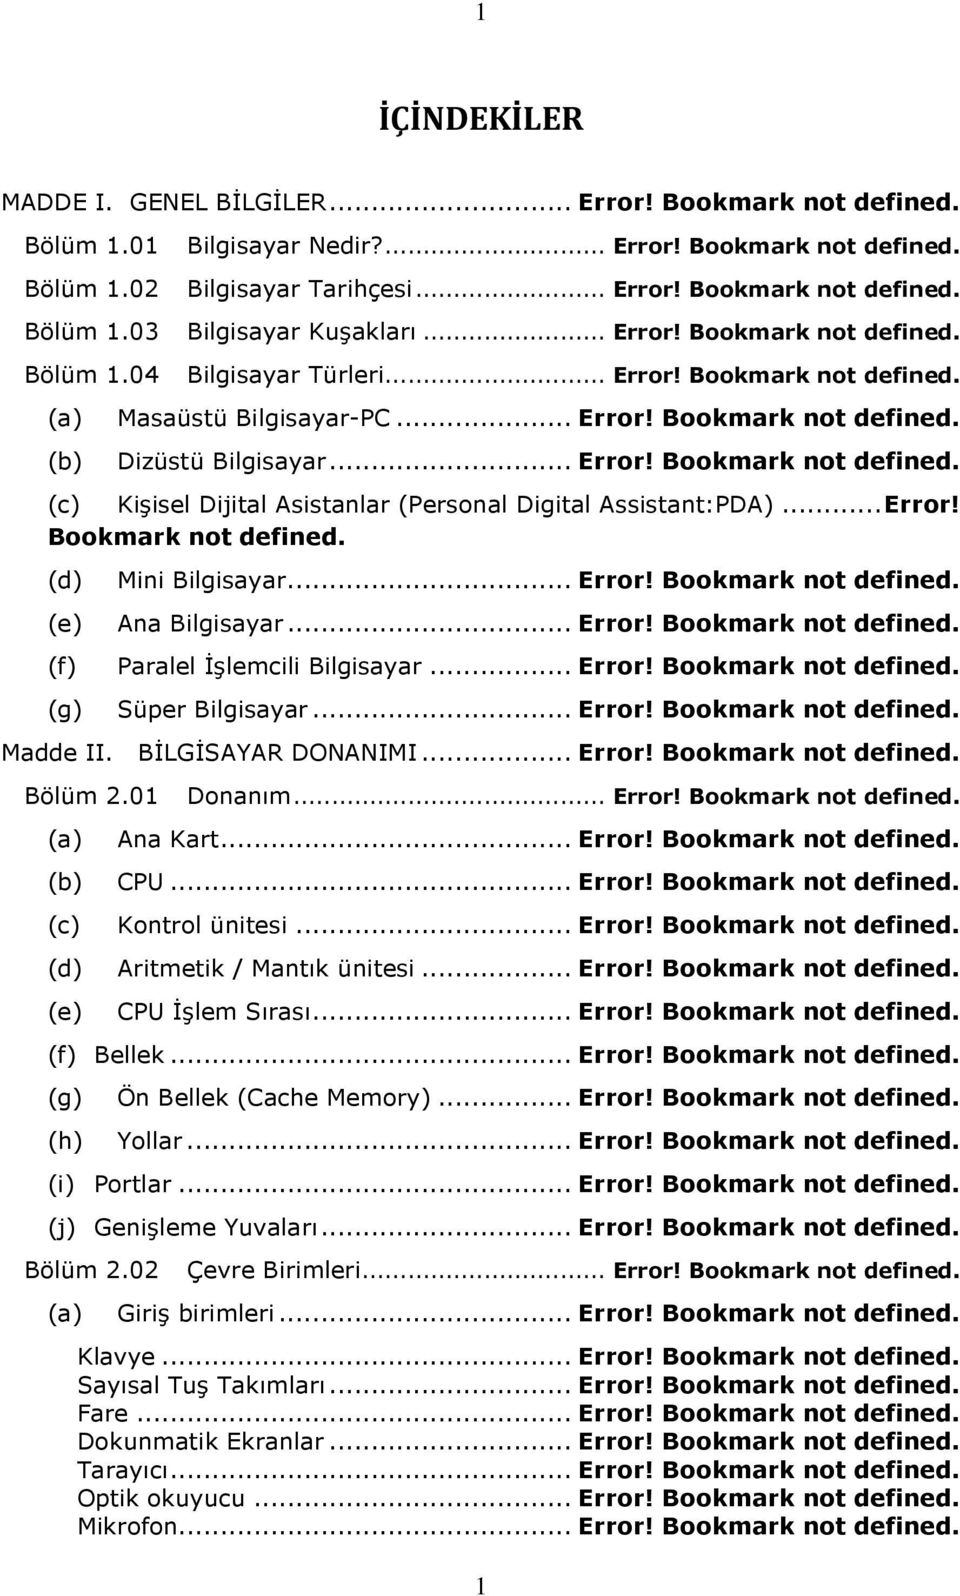 .. Error! Bookmark not defined. (d) Mini Bilgisayar... Error! Bookmark not defined. (e) Ana Bilgisayar... Error! Bookmark not defined. (f) Paralel İşlemcili Bilgisayar... Error! Bookmark not defined. (g) Süper Bilgisayar.